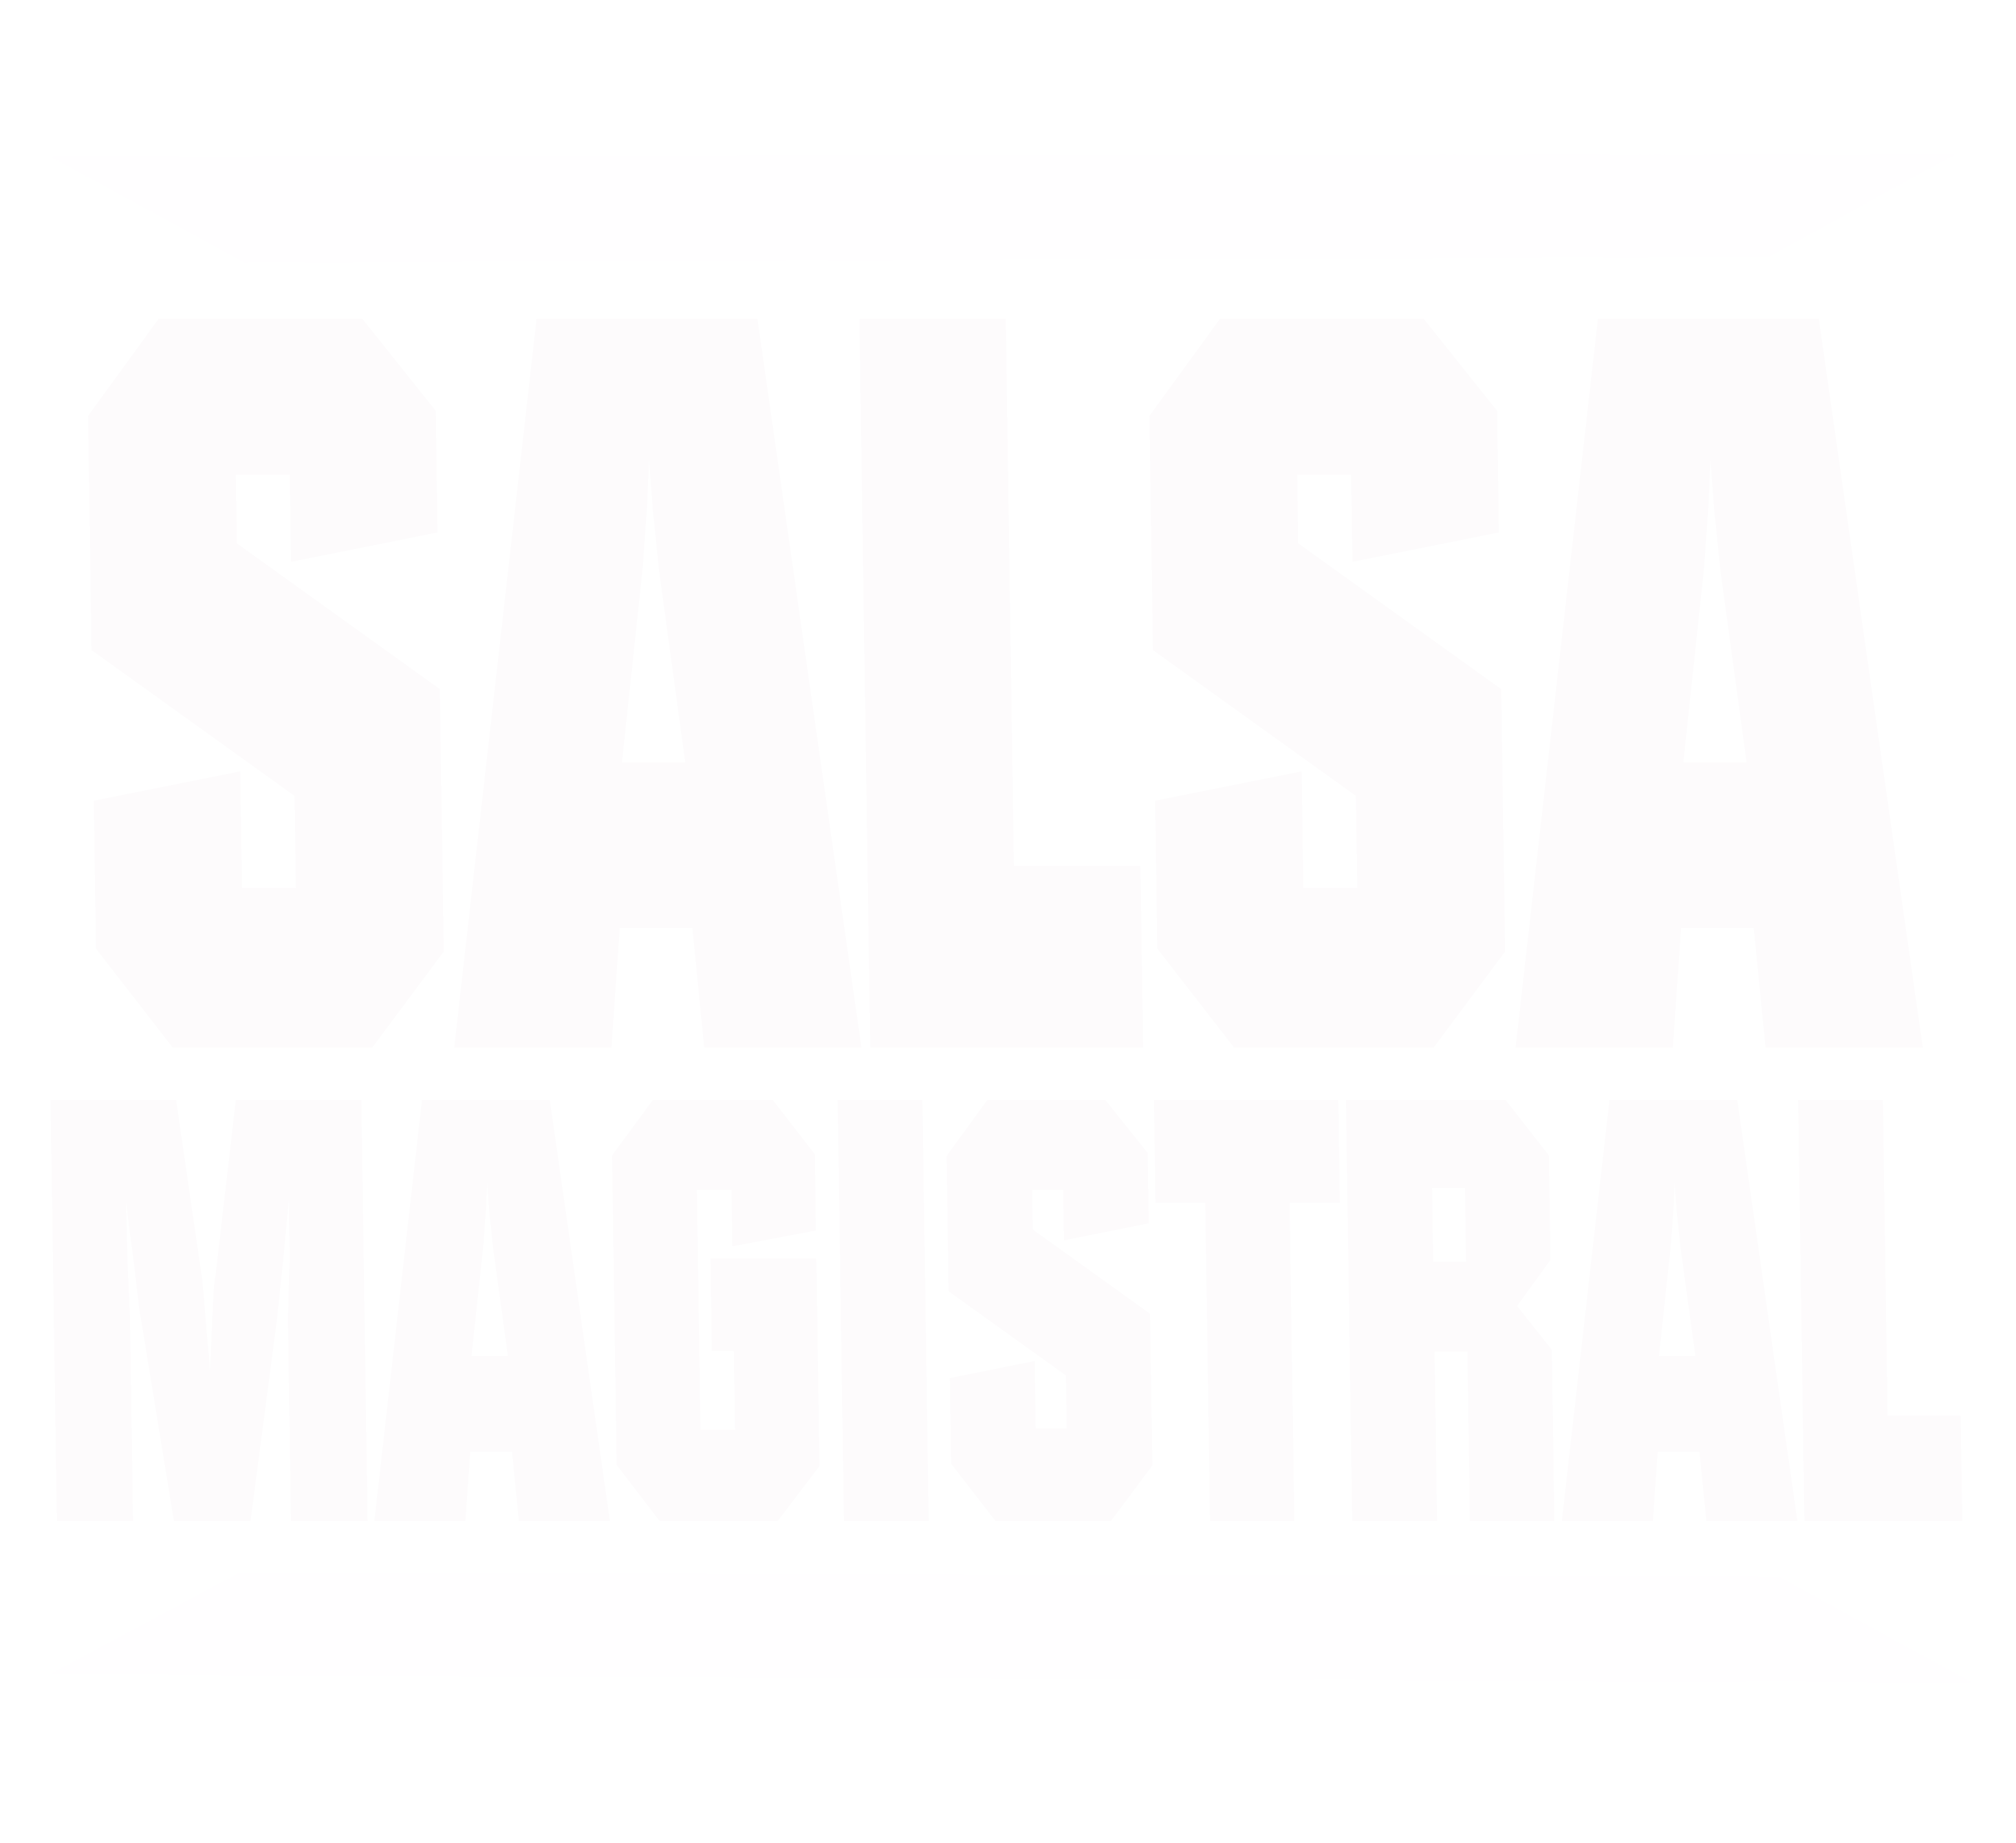 Salsa Magistral